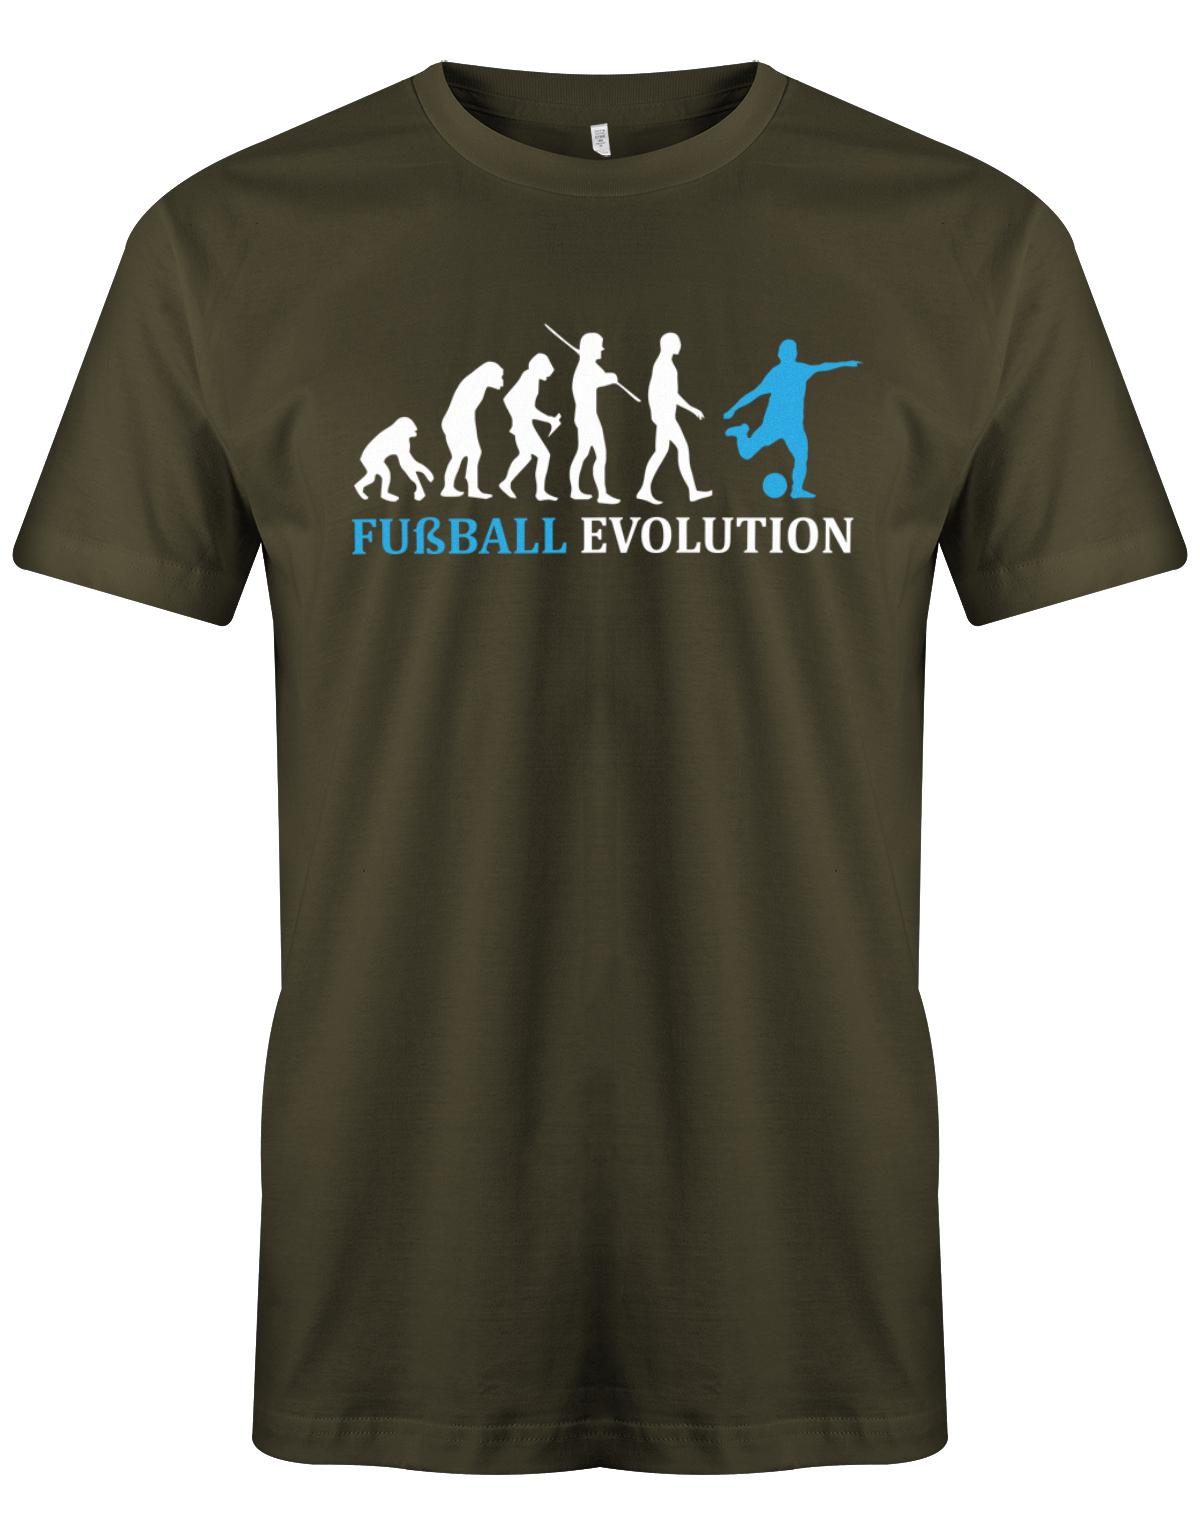 Fussball-Evolution-Herren-Shirt-Army-Hellblau